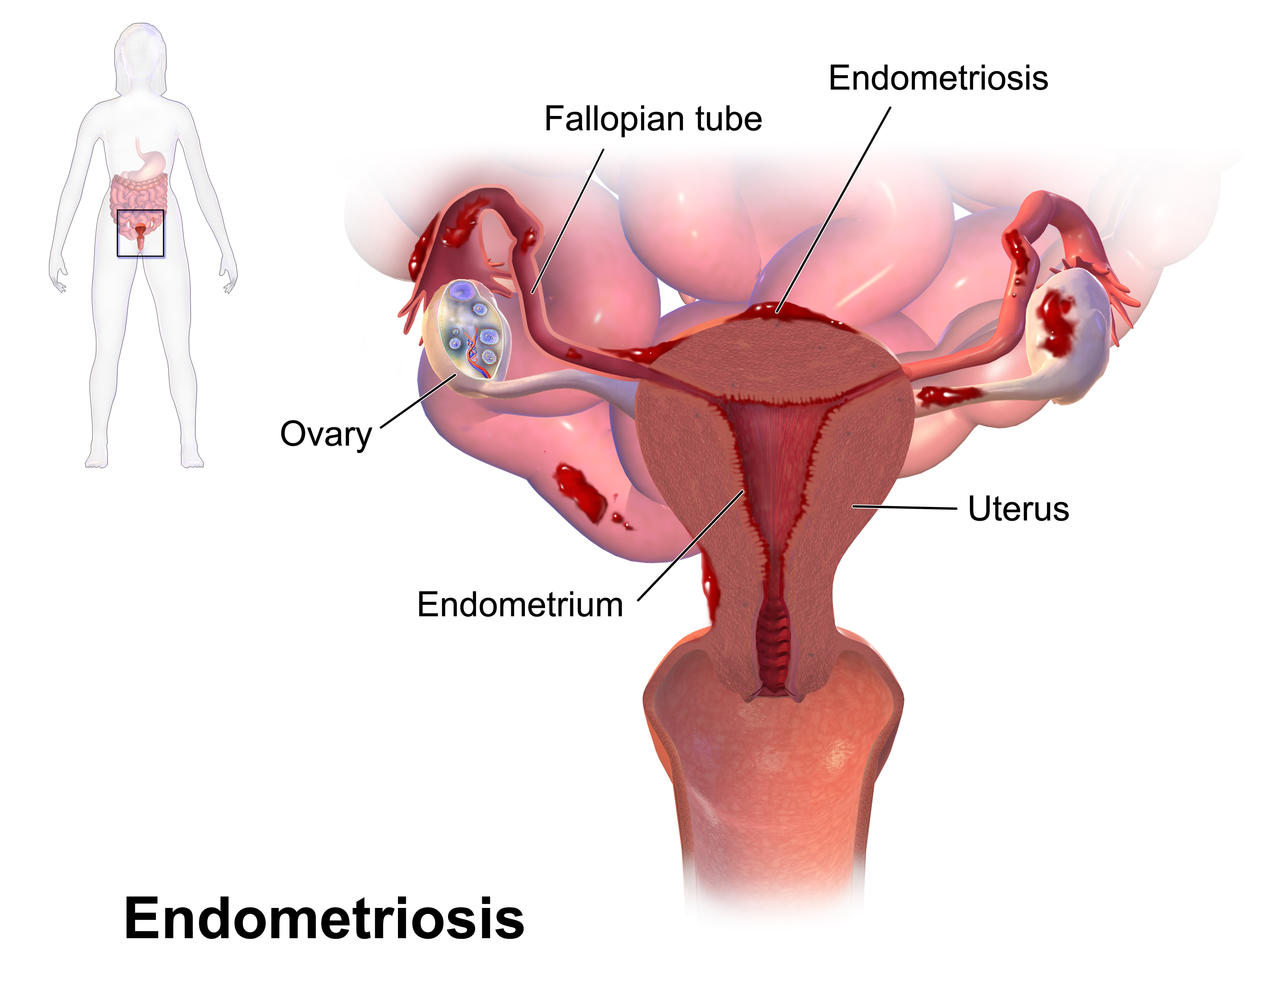 Instituto Europeo de Fertilidad Diagnostico Endometriosis.png